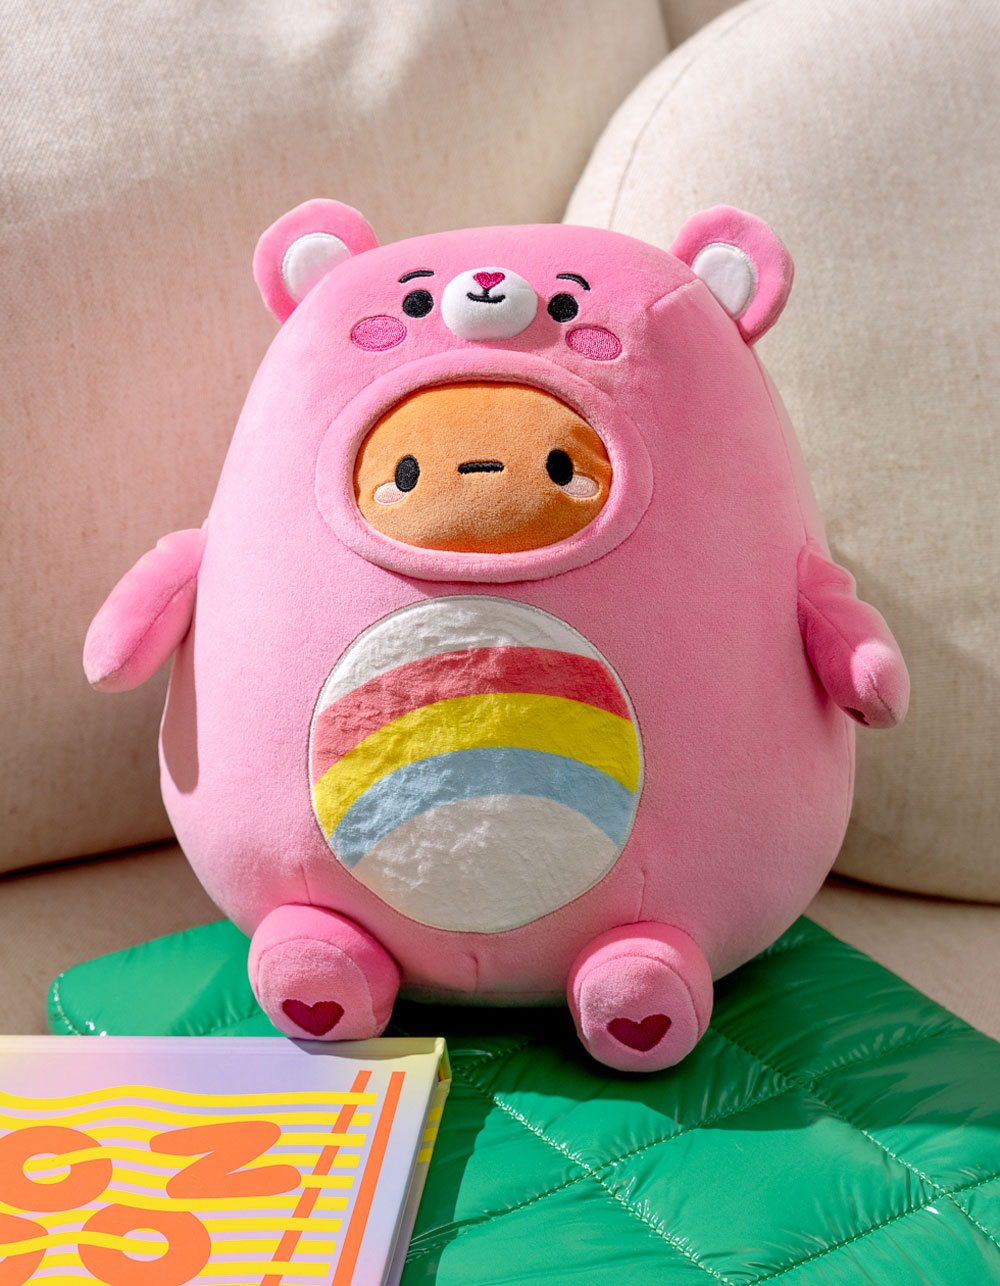 SMOKO x Care Bears Cheer Bear Tayto Potato Mochi Plush Toy